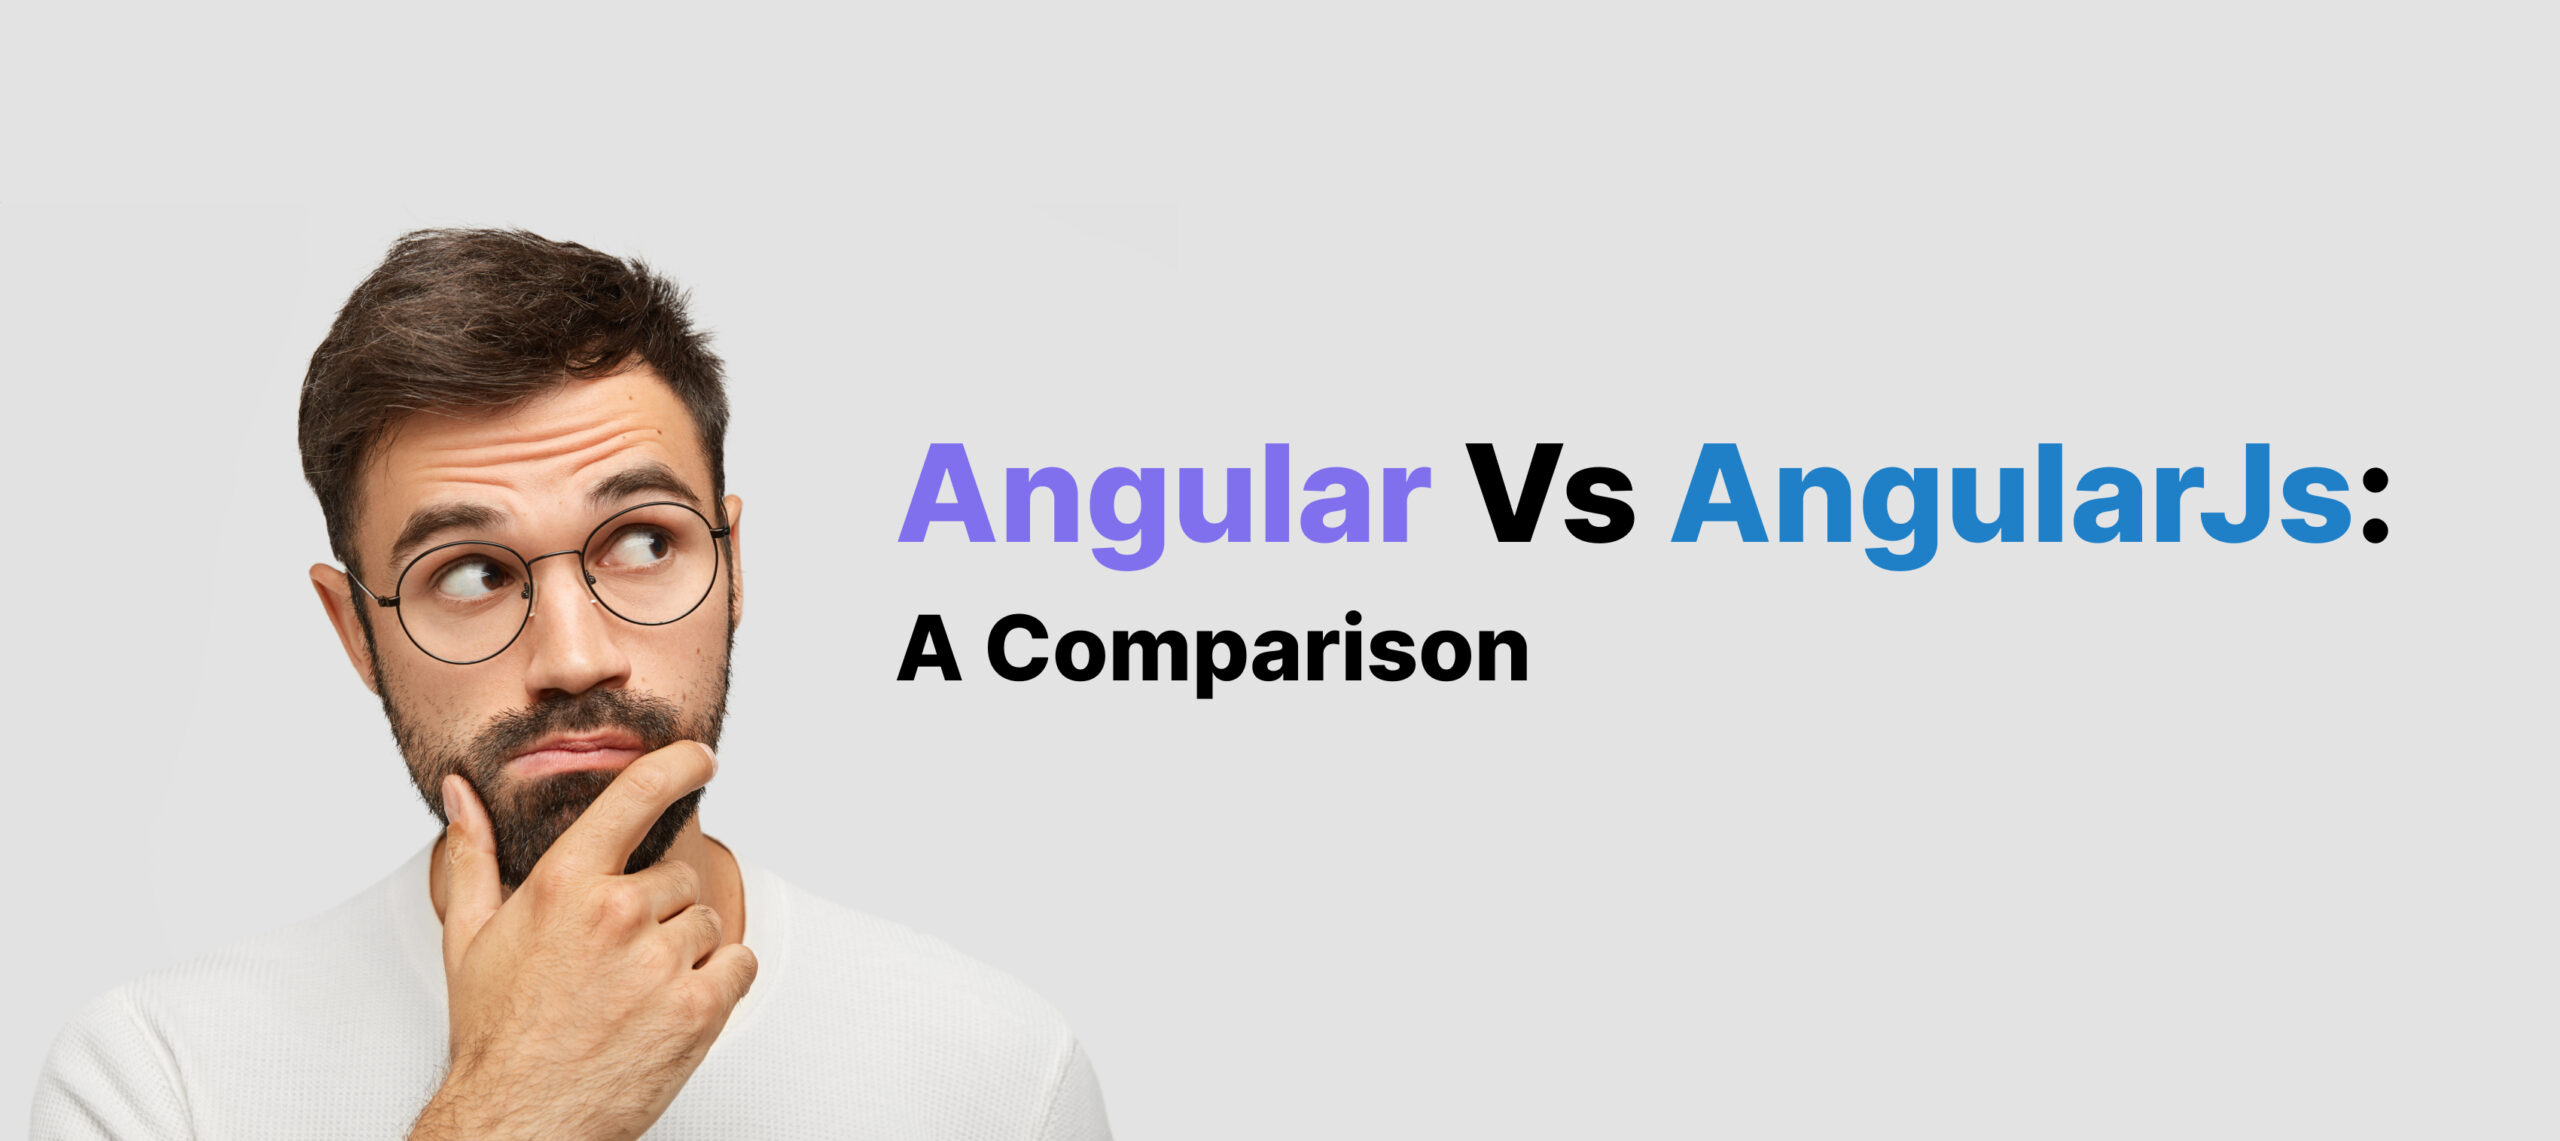  Angular Vs AngularJs: A Comparison